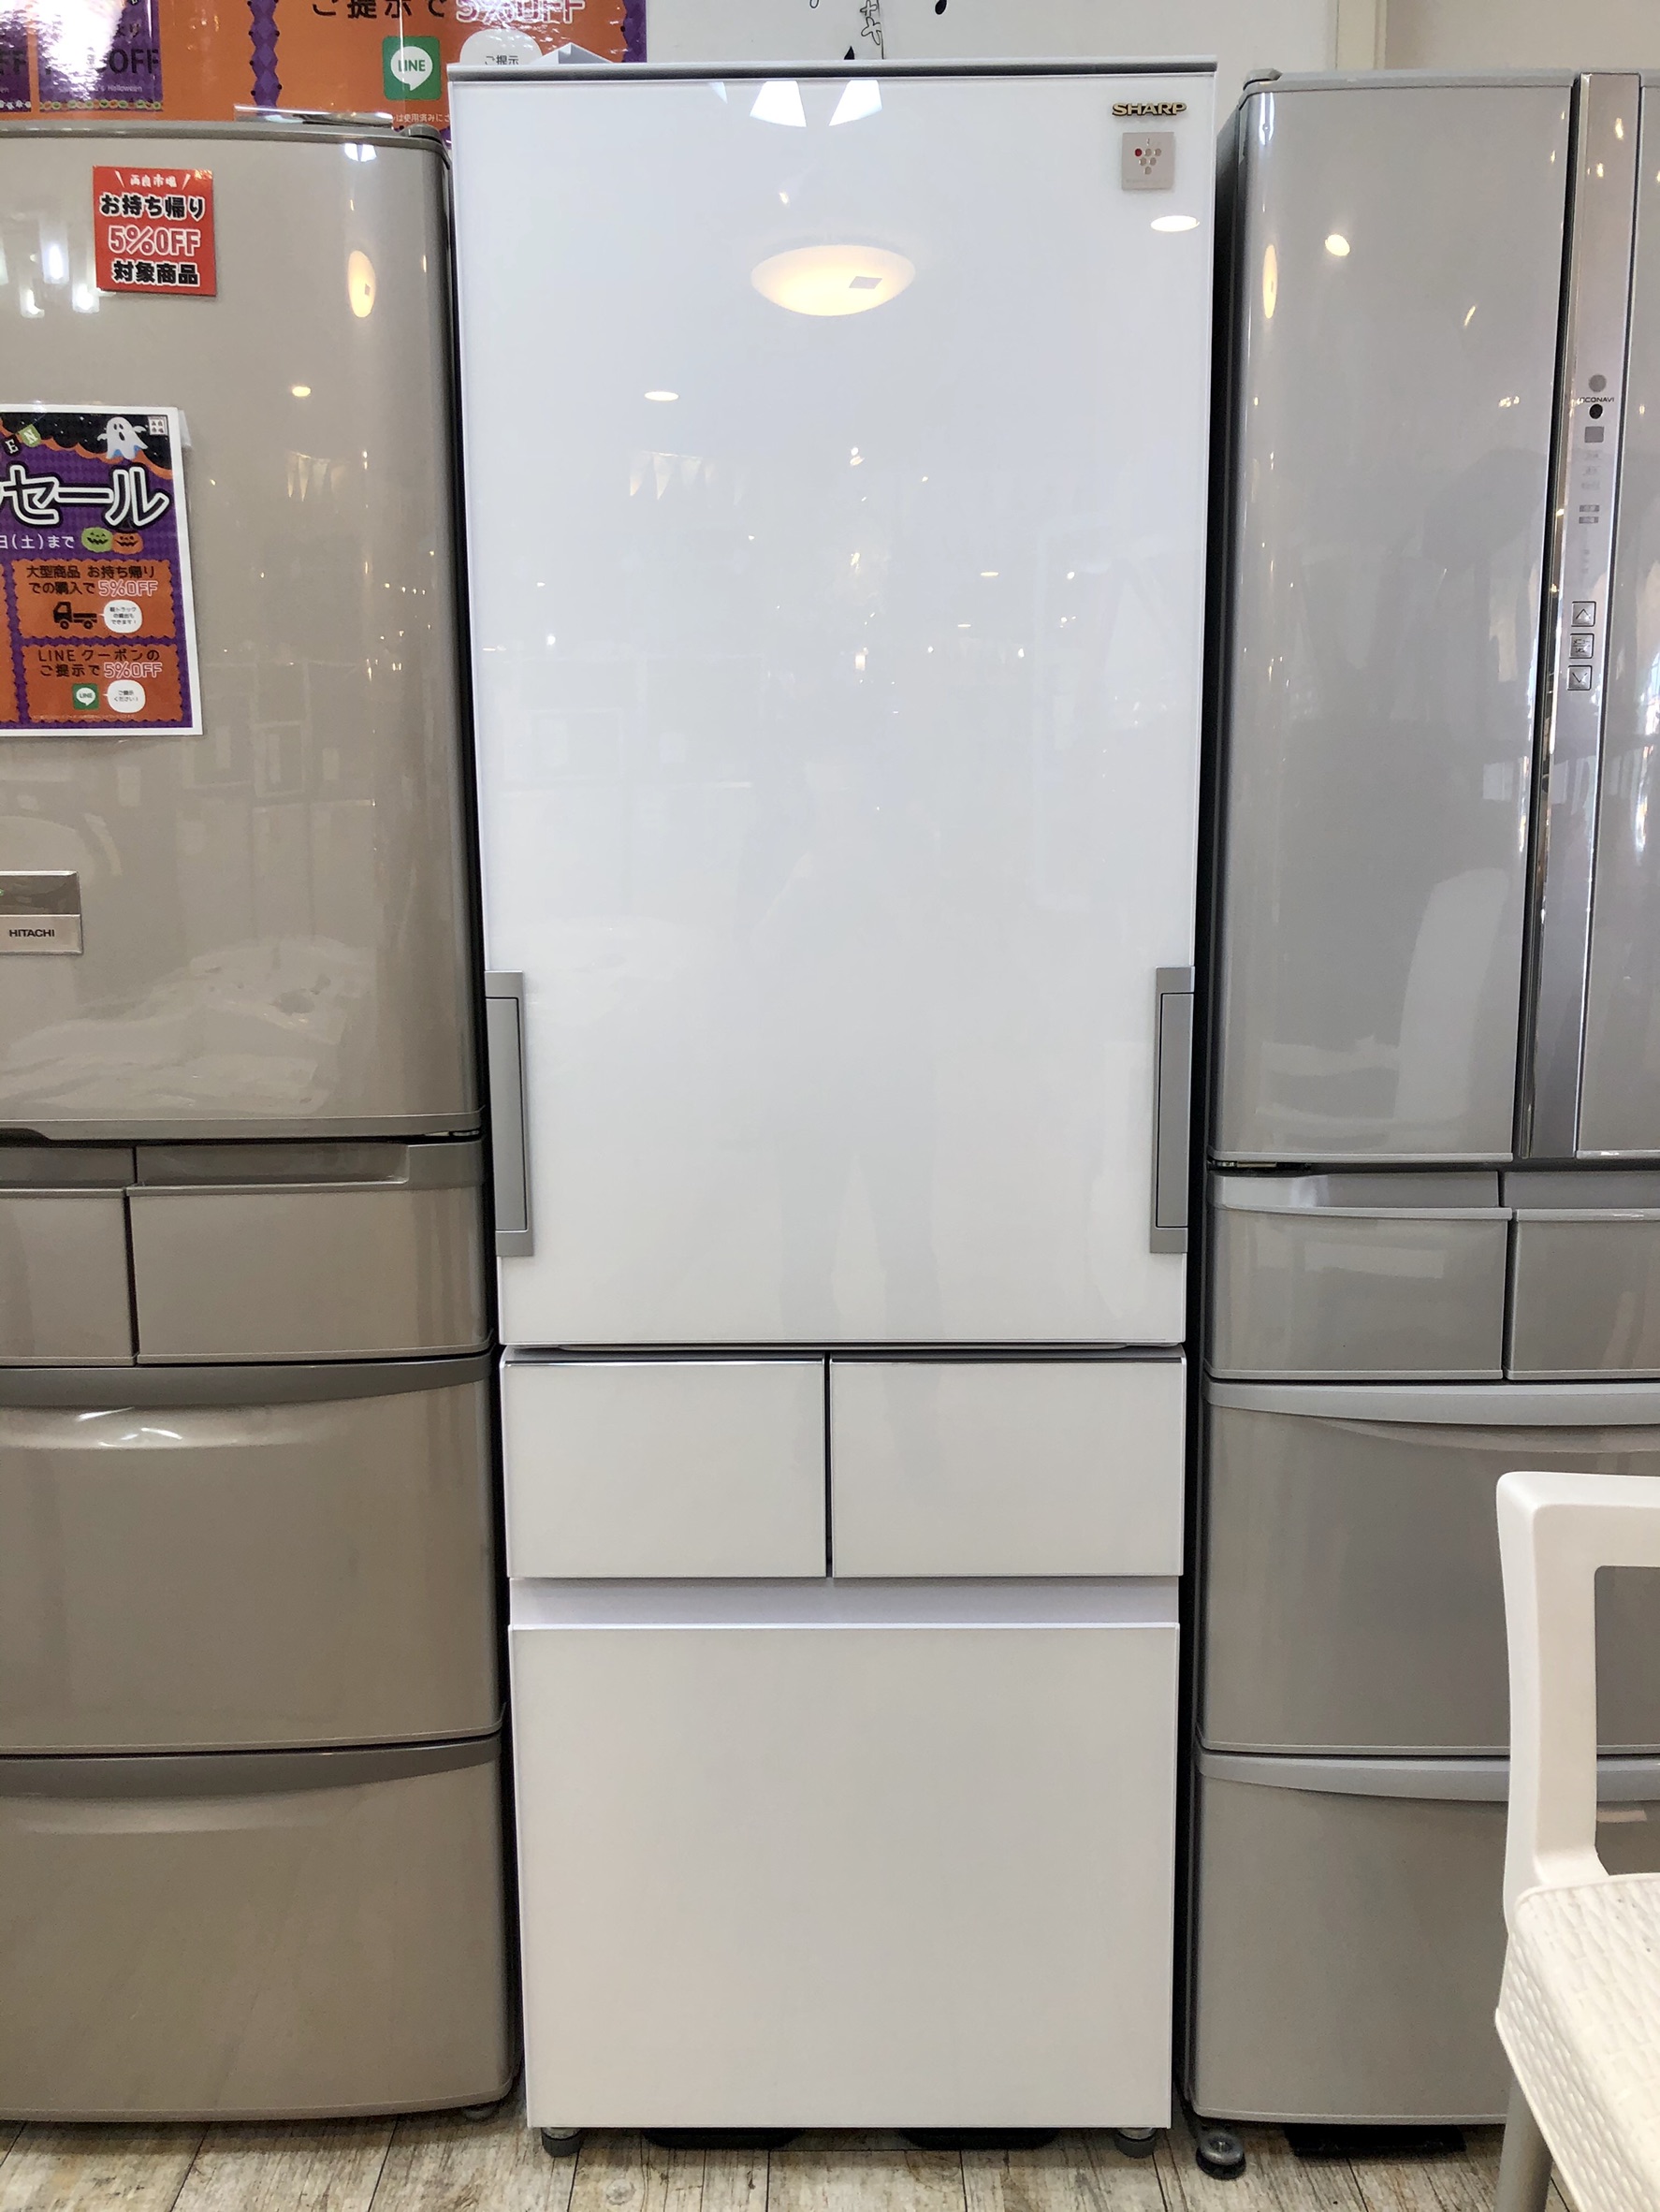 HITACHI【高年式】2018年製 502L シャープ 5ドア冷凍冷蔵庫 SJ-WX50E